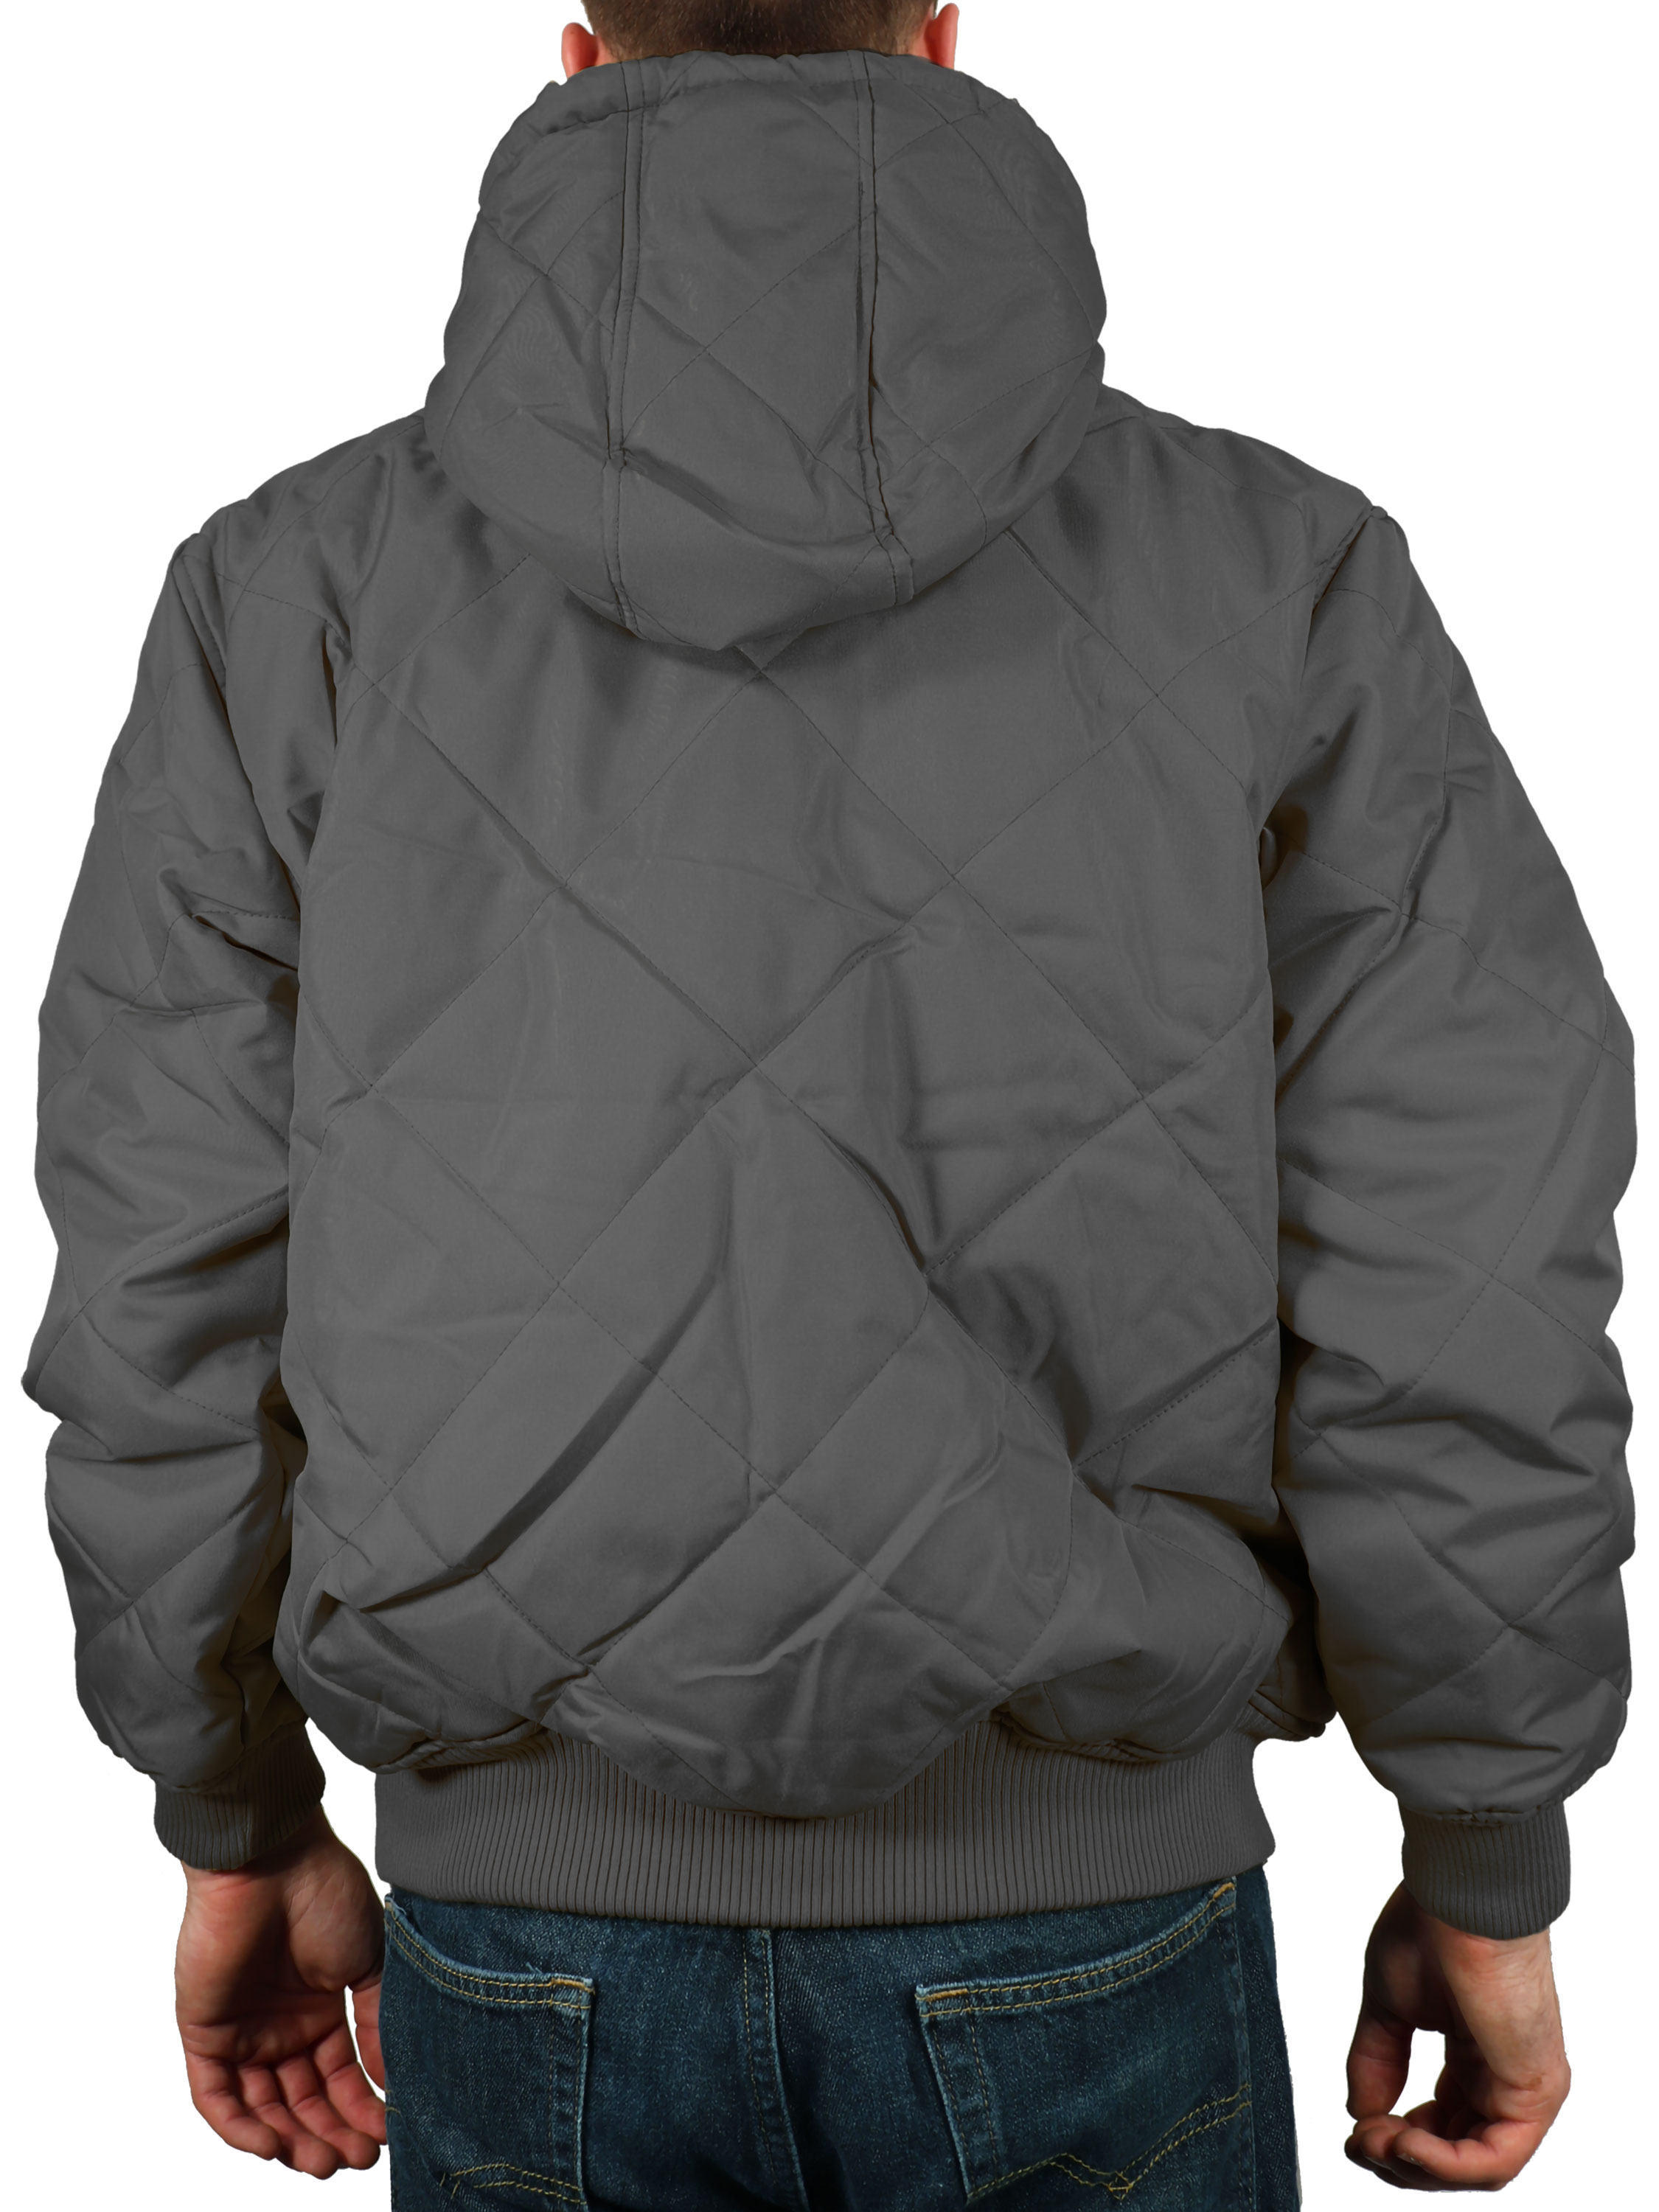 Macondoo Mens Quilted Fleece Overcoat Jacket Cotton-Padded Parkas Coat 